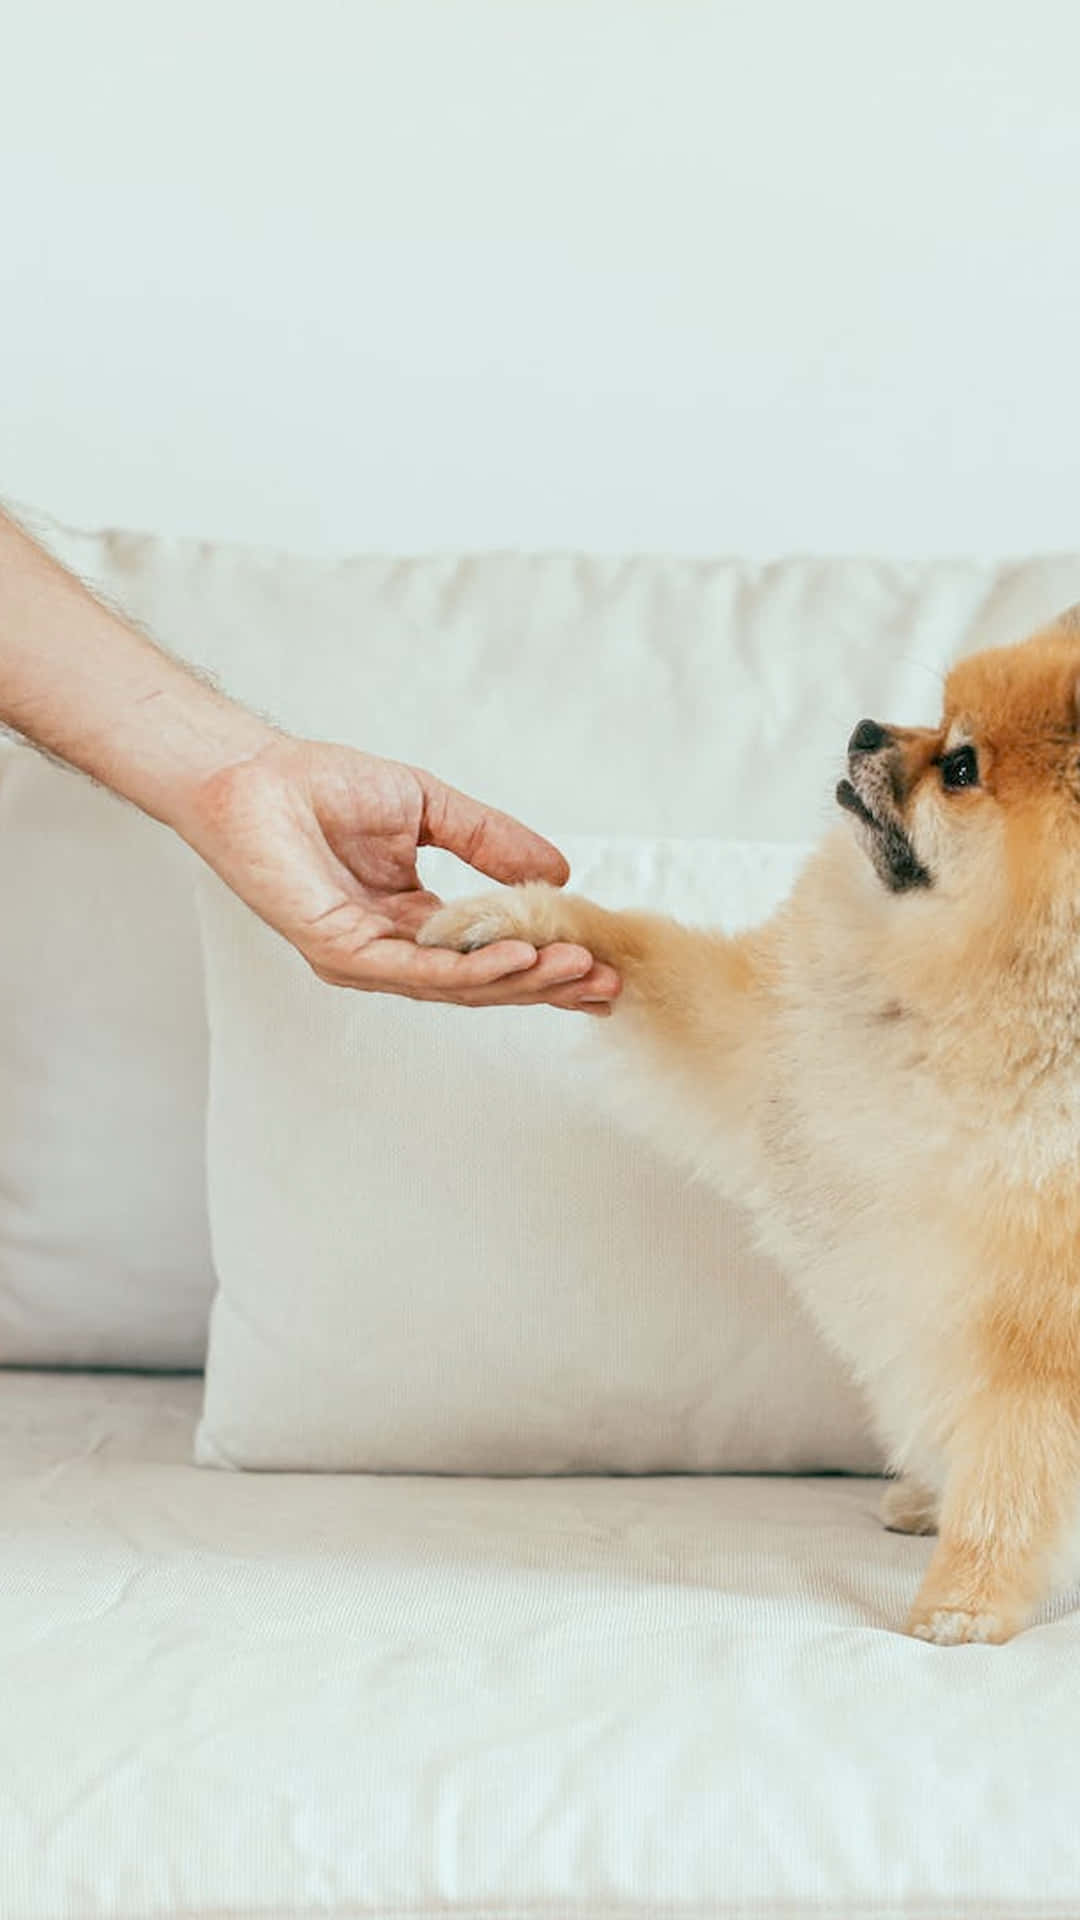 Handshake With Dog Background